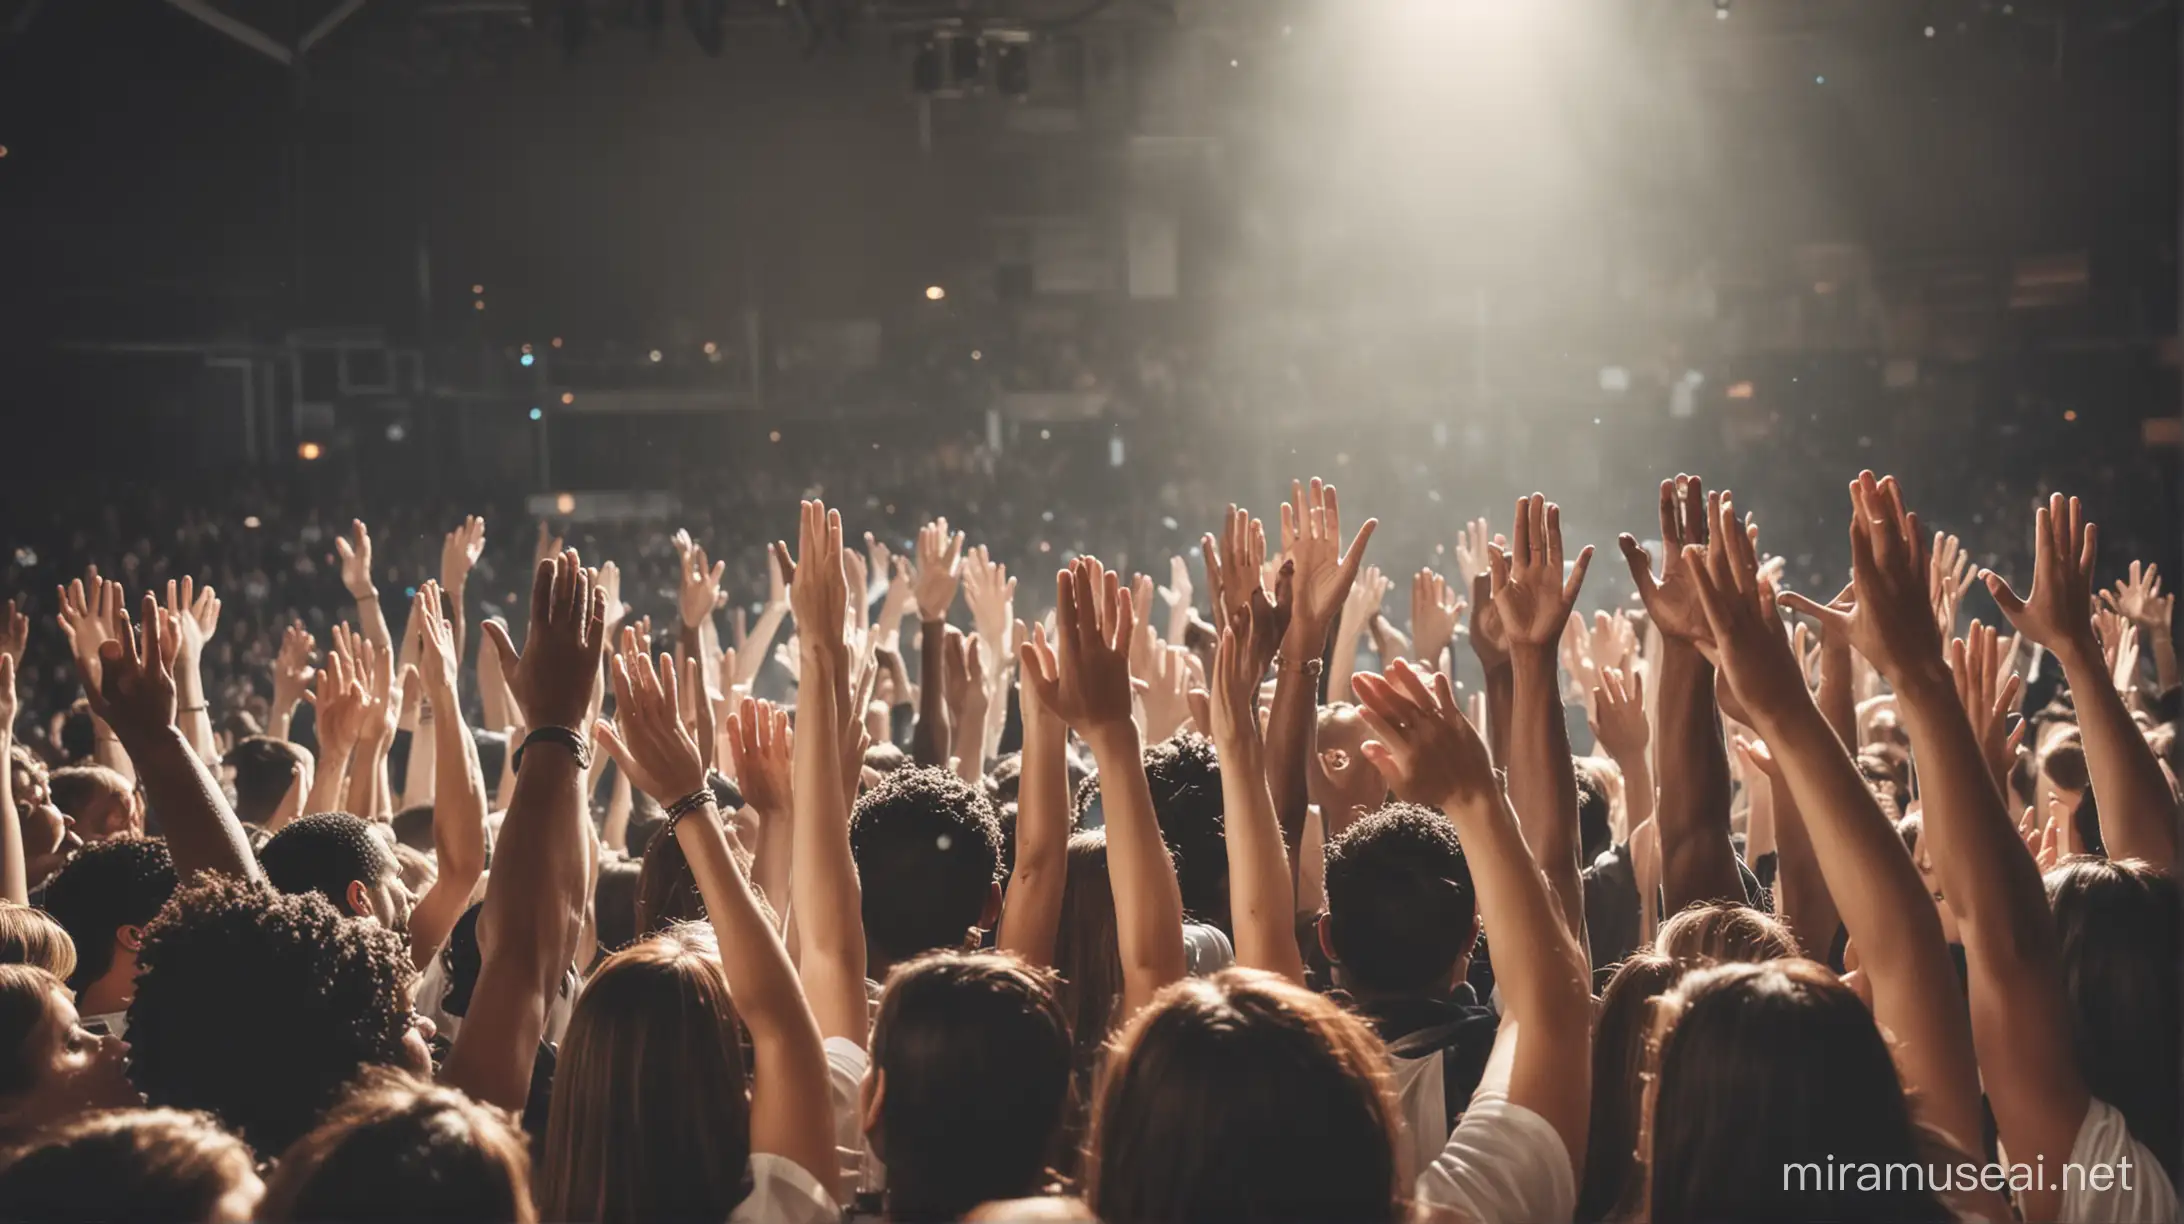 Christian Worship Gathering Hands Raised in Devotion